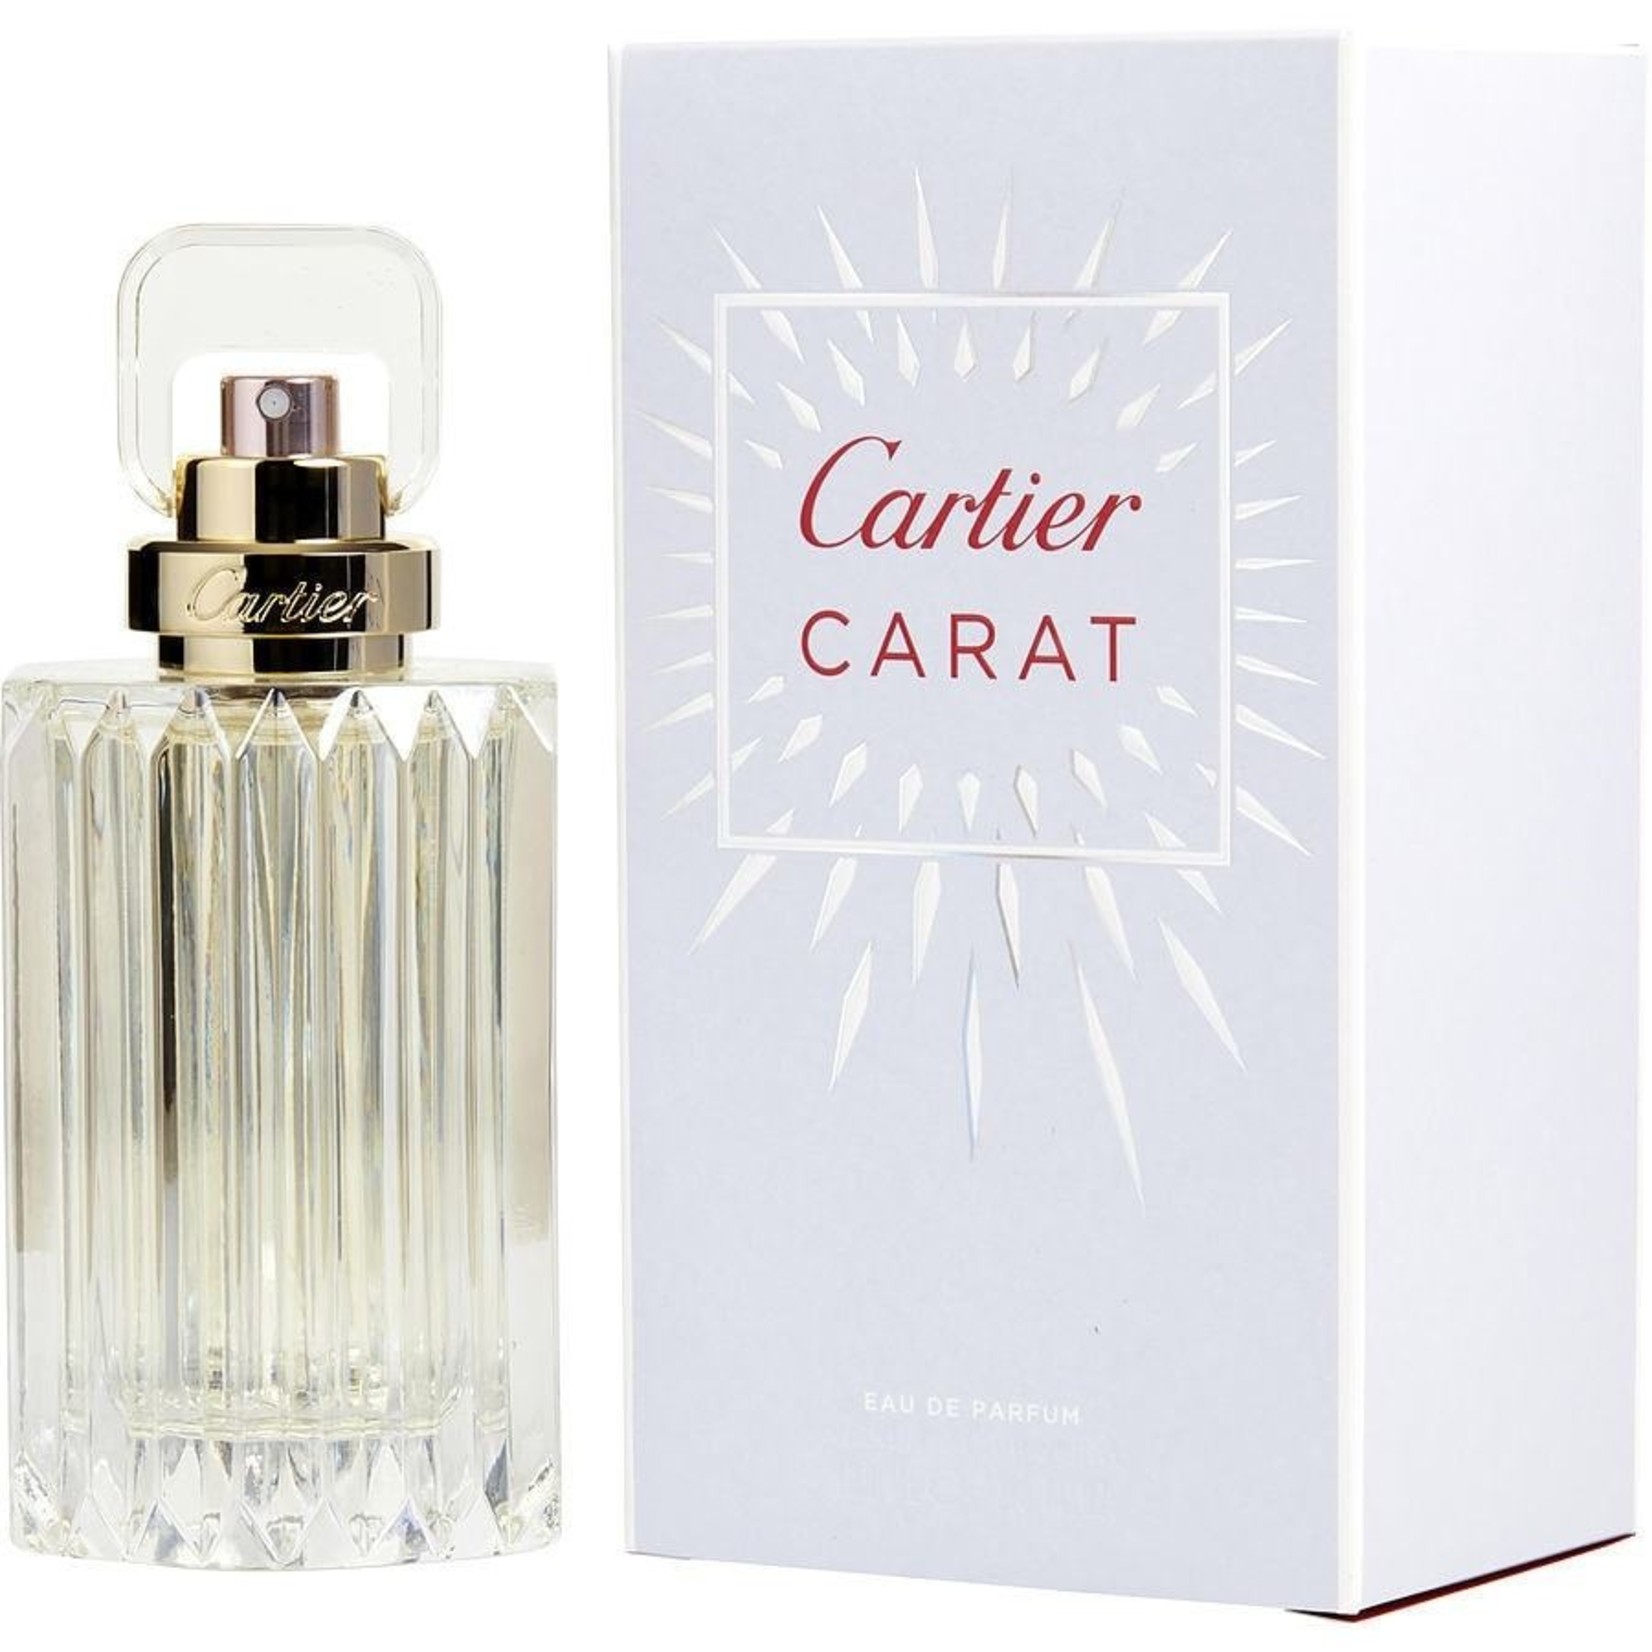 CARTIER CARTIER - CARAT Eau De Parfum